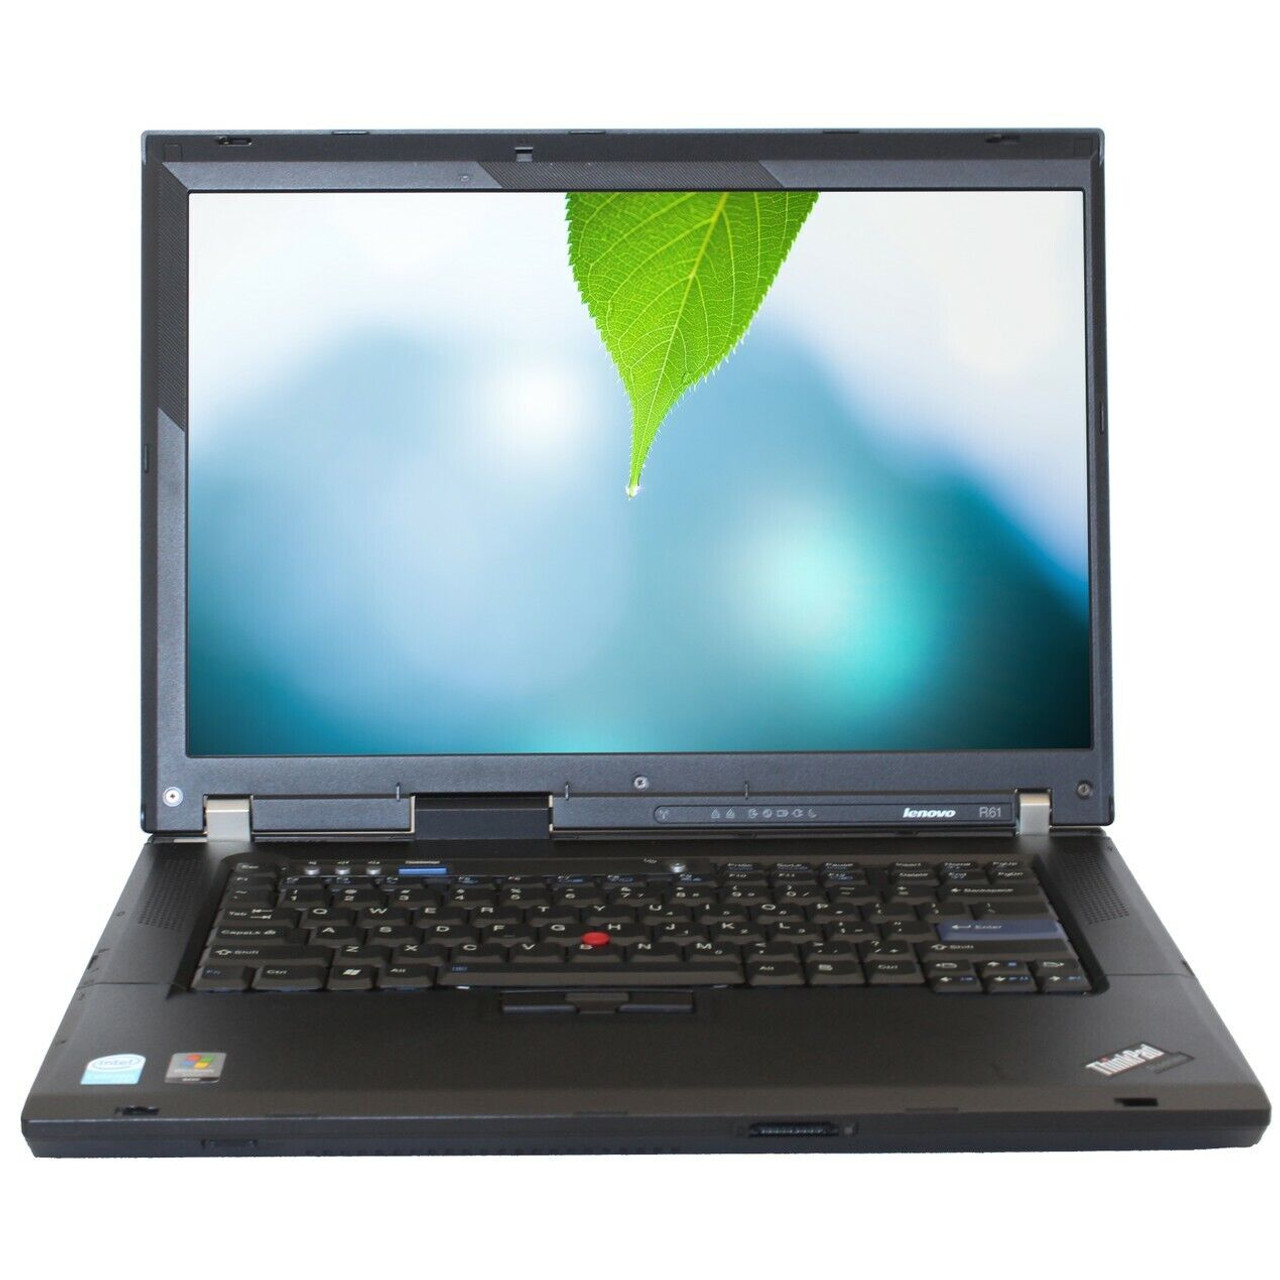 Lenovo ThinkPad R61 Notebook Laptop Pentium 4GB 250GB HDD Windows 10 HOME